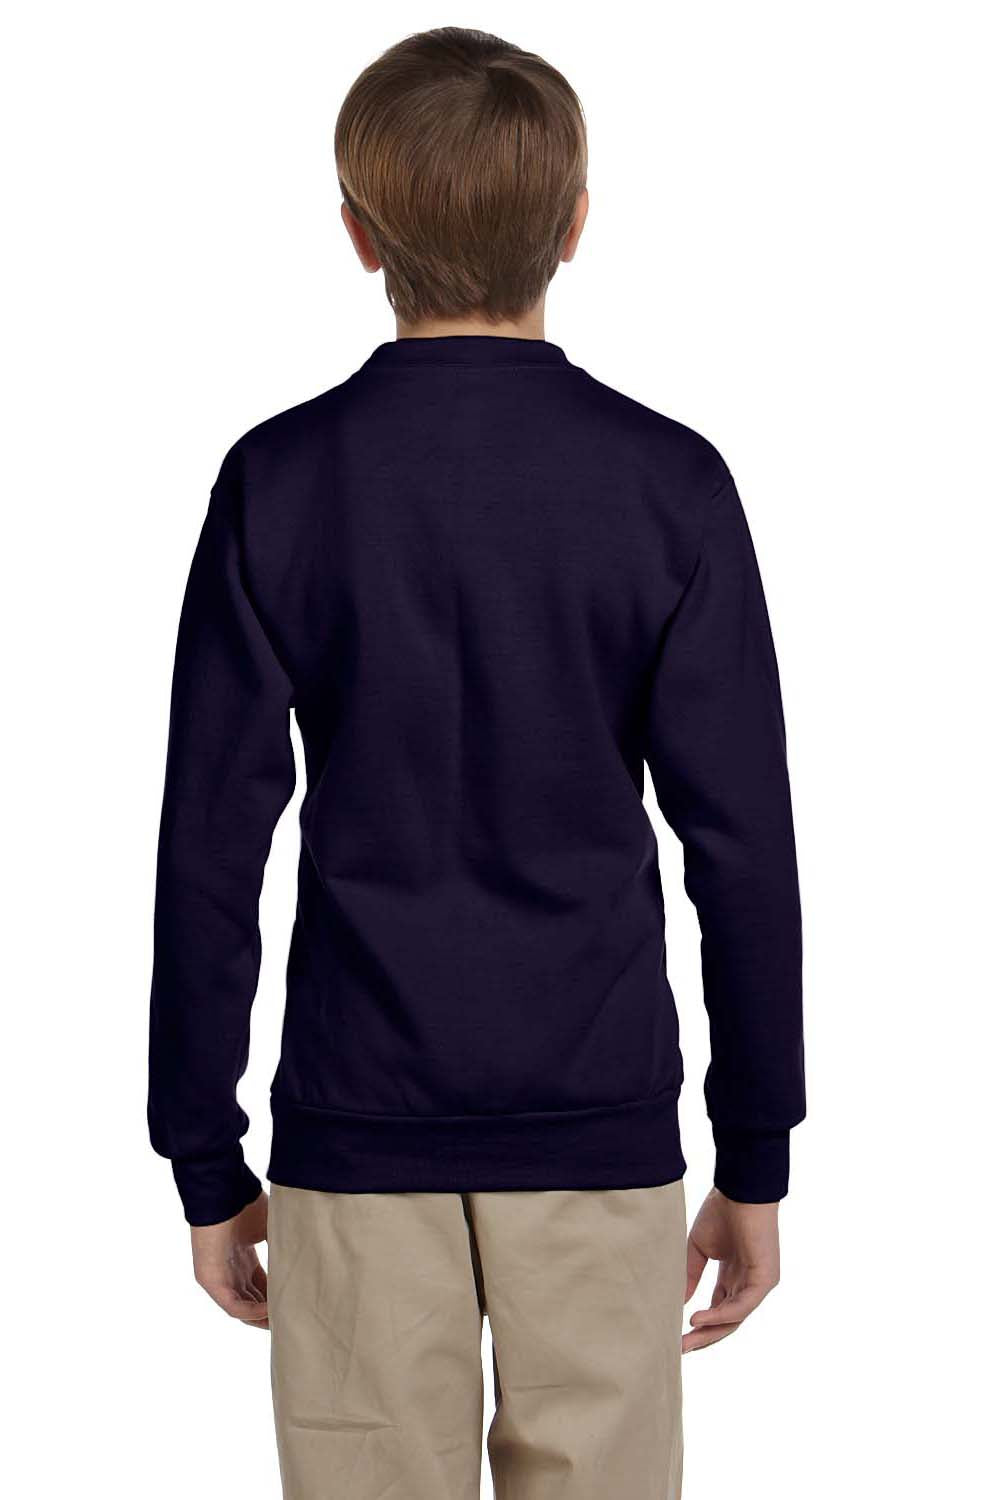 Hanes P360 Youth EcoSmart Print Pro XP Fleece Crewneck Sweatshirt Navy Blue Back